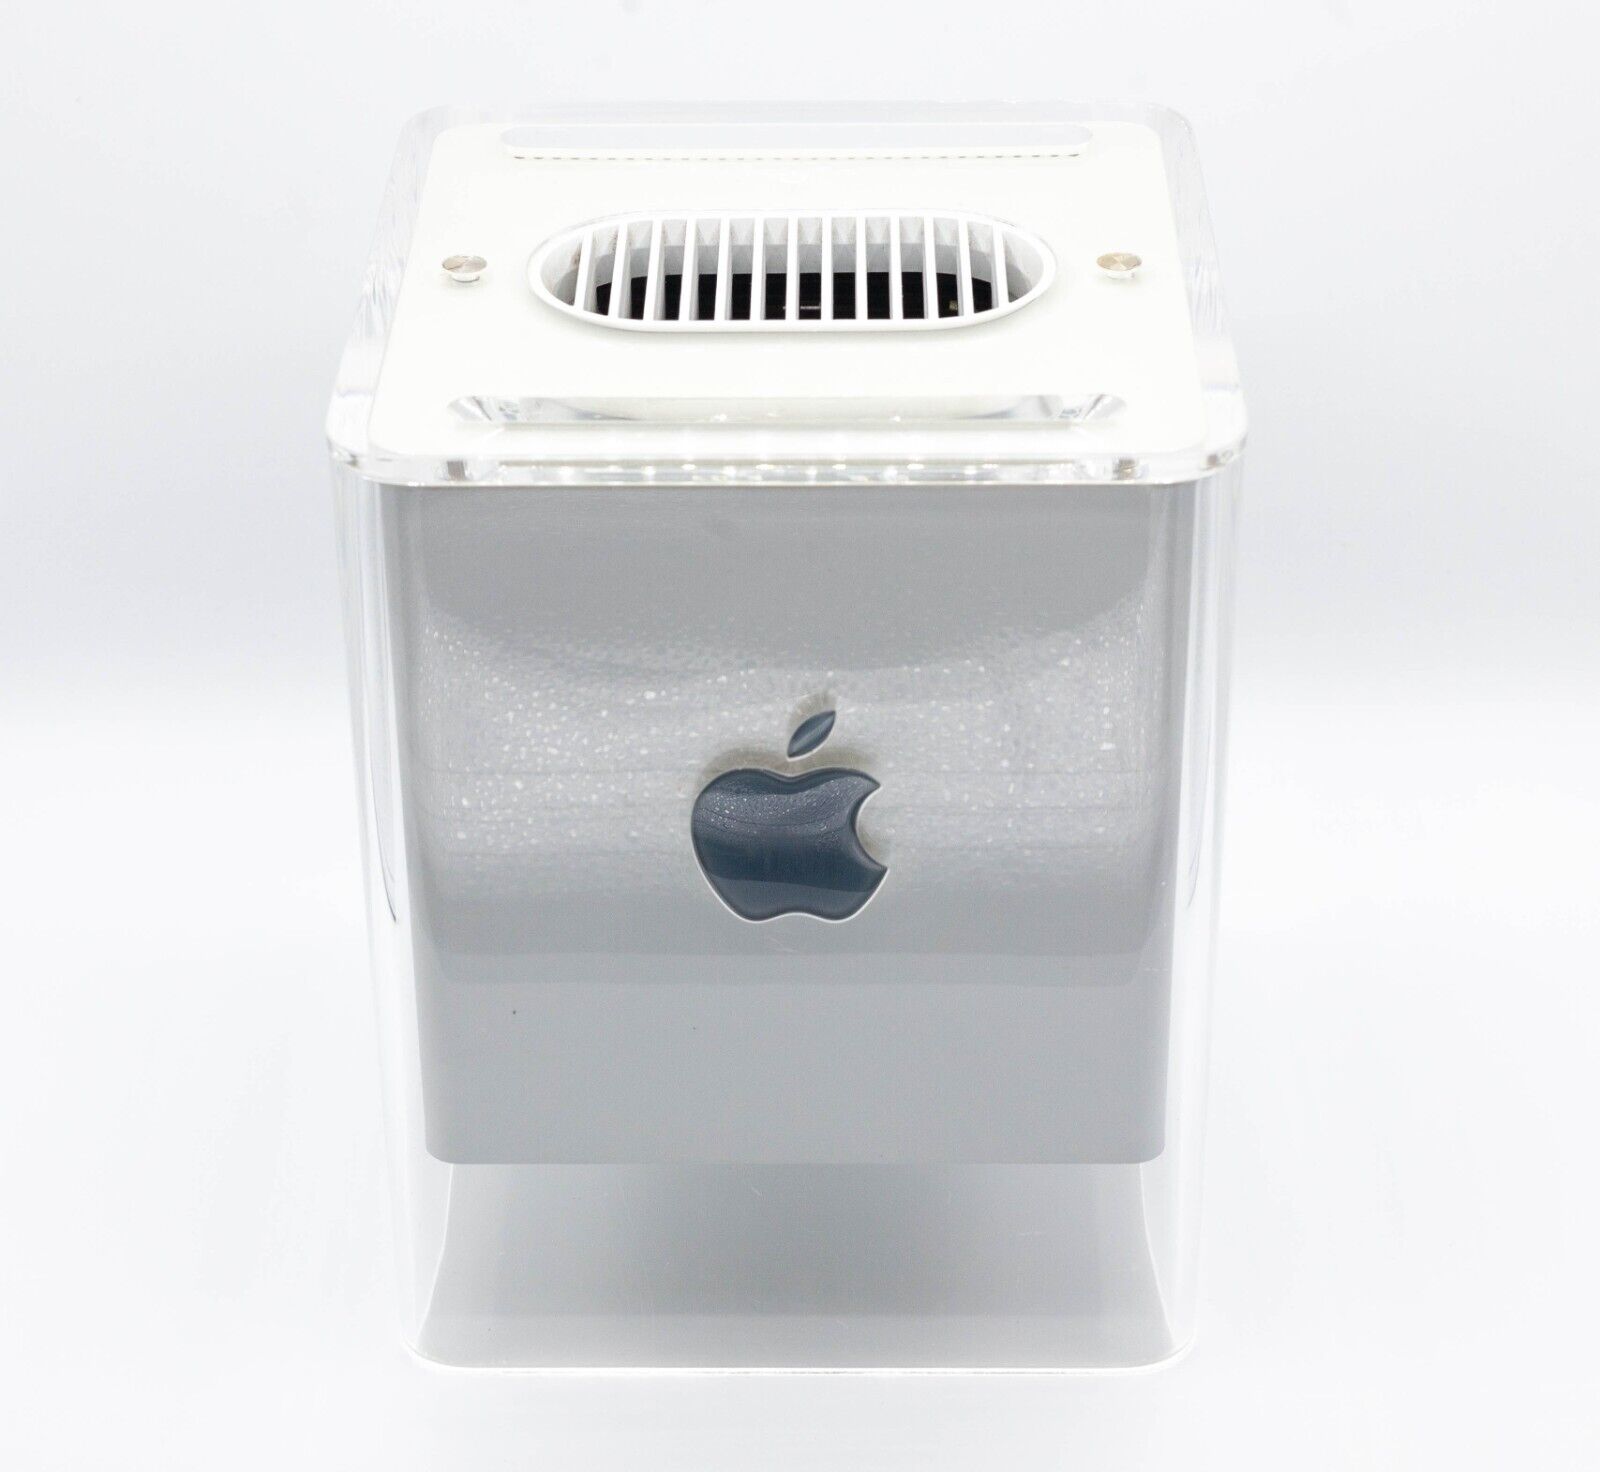 Untested - Apple Power Mac G4 Cube 500 MHz M7886